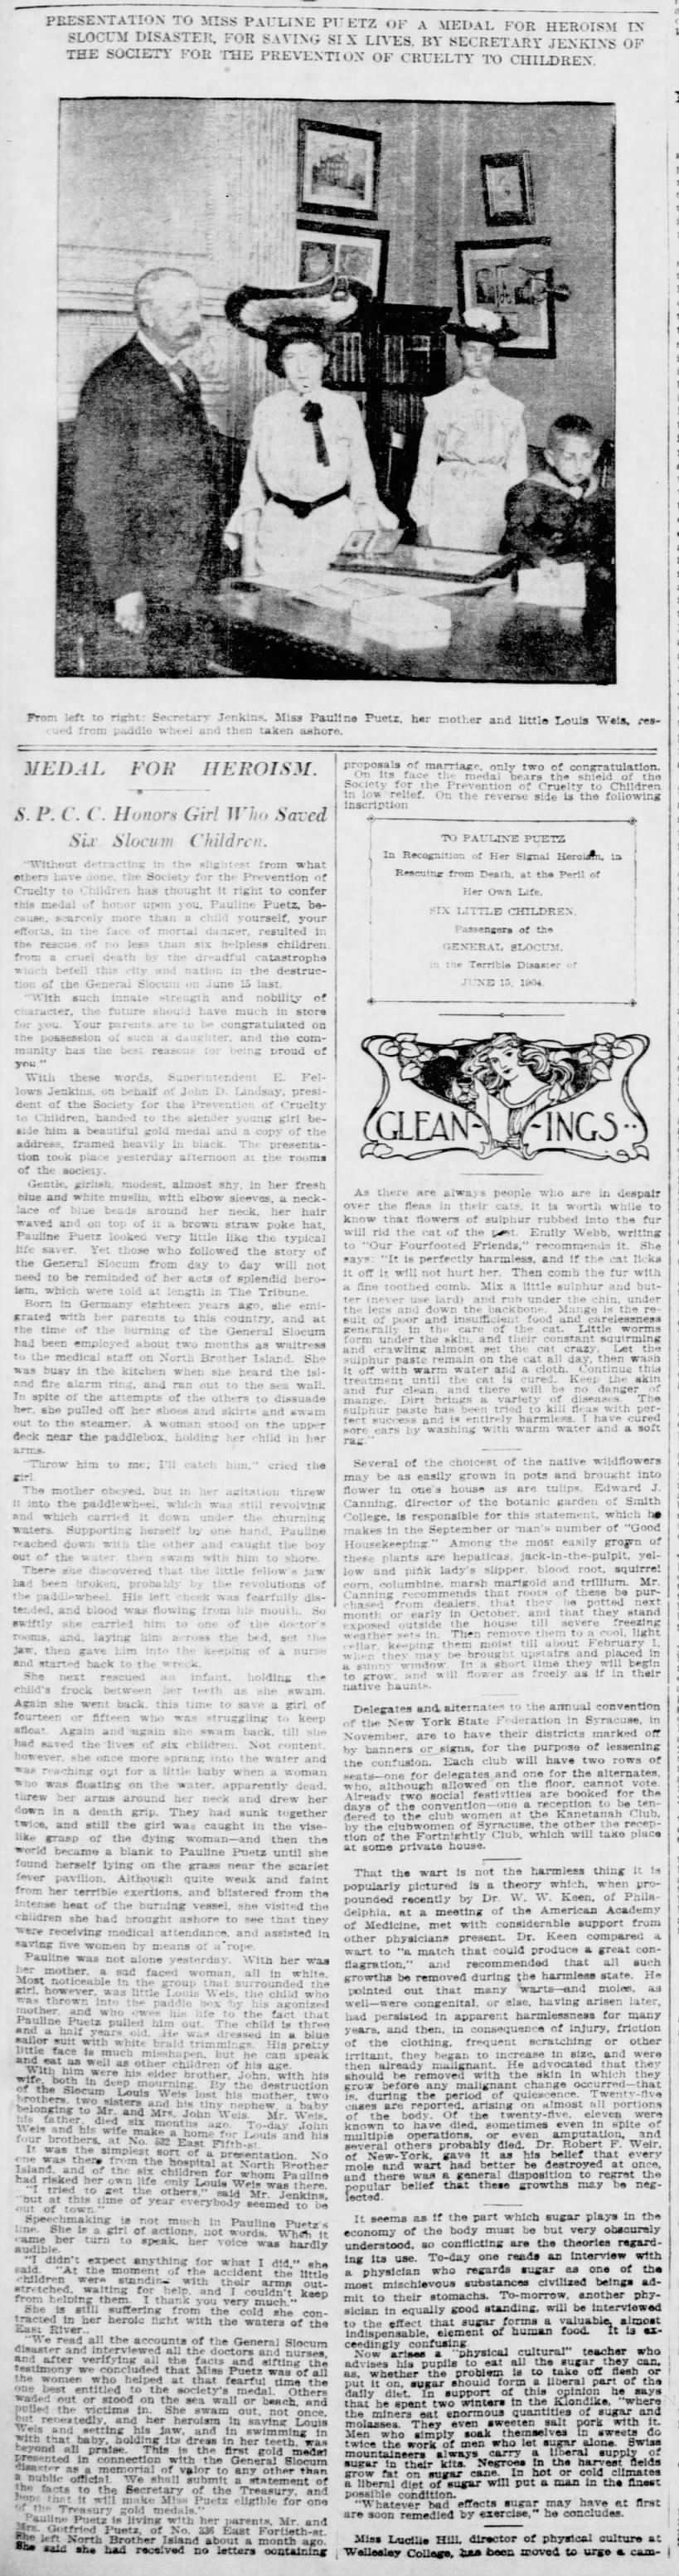 Newspaper account of Pauline Puetz's bravery during General Slocum disaster